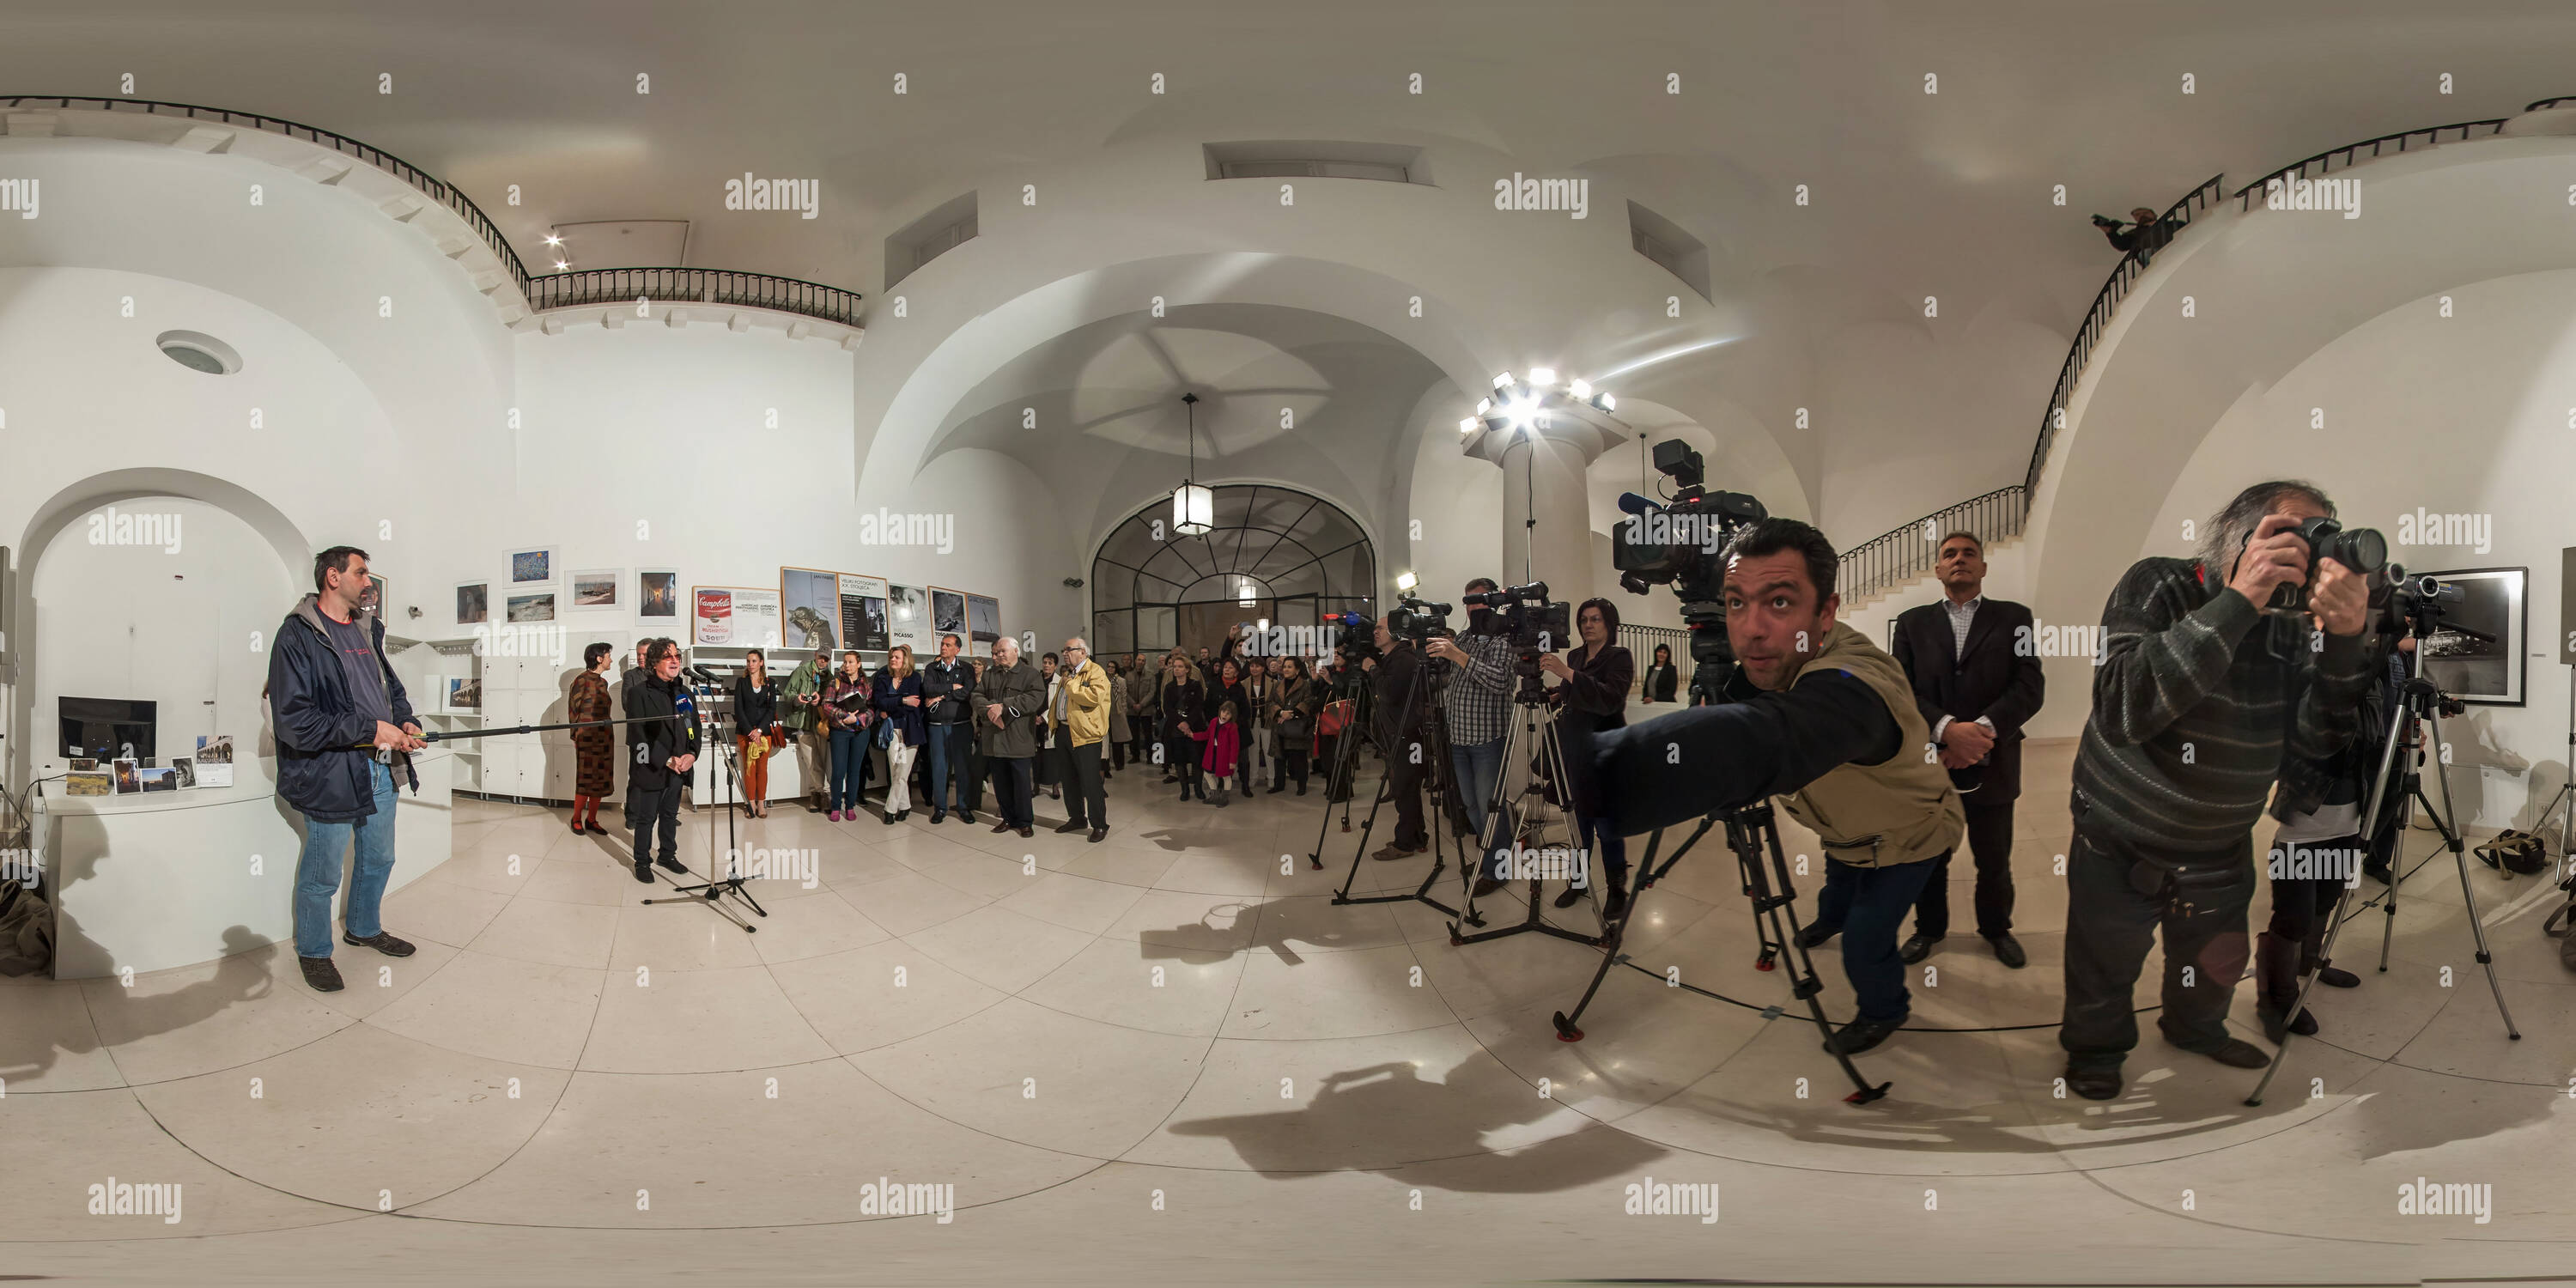 360 degree panoramic view of Robert Farber - opening 09.04.2013.